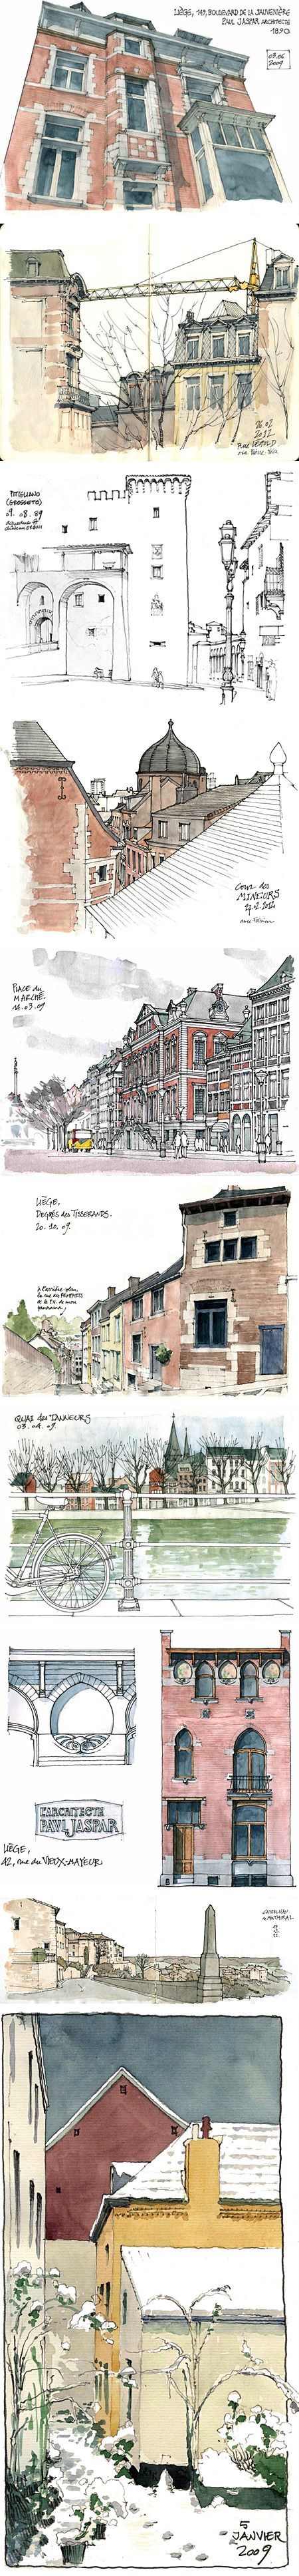 Gérard Michel: 几幅西方小城风格的精彩手绘